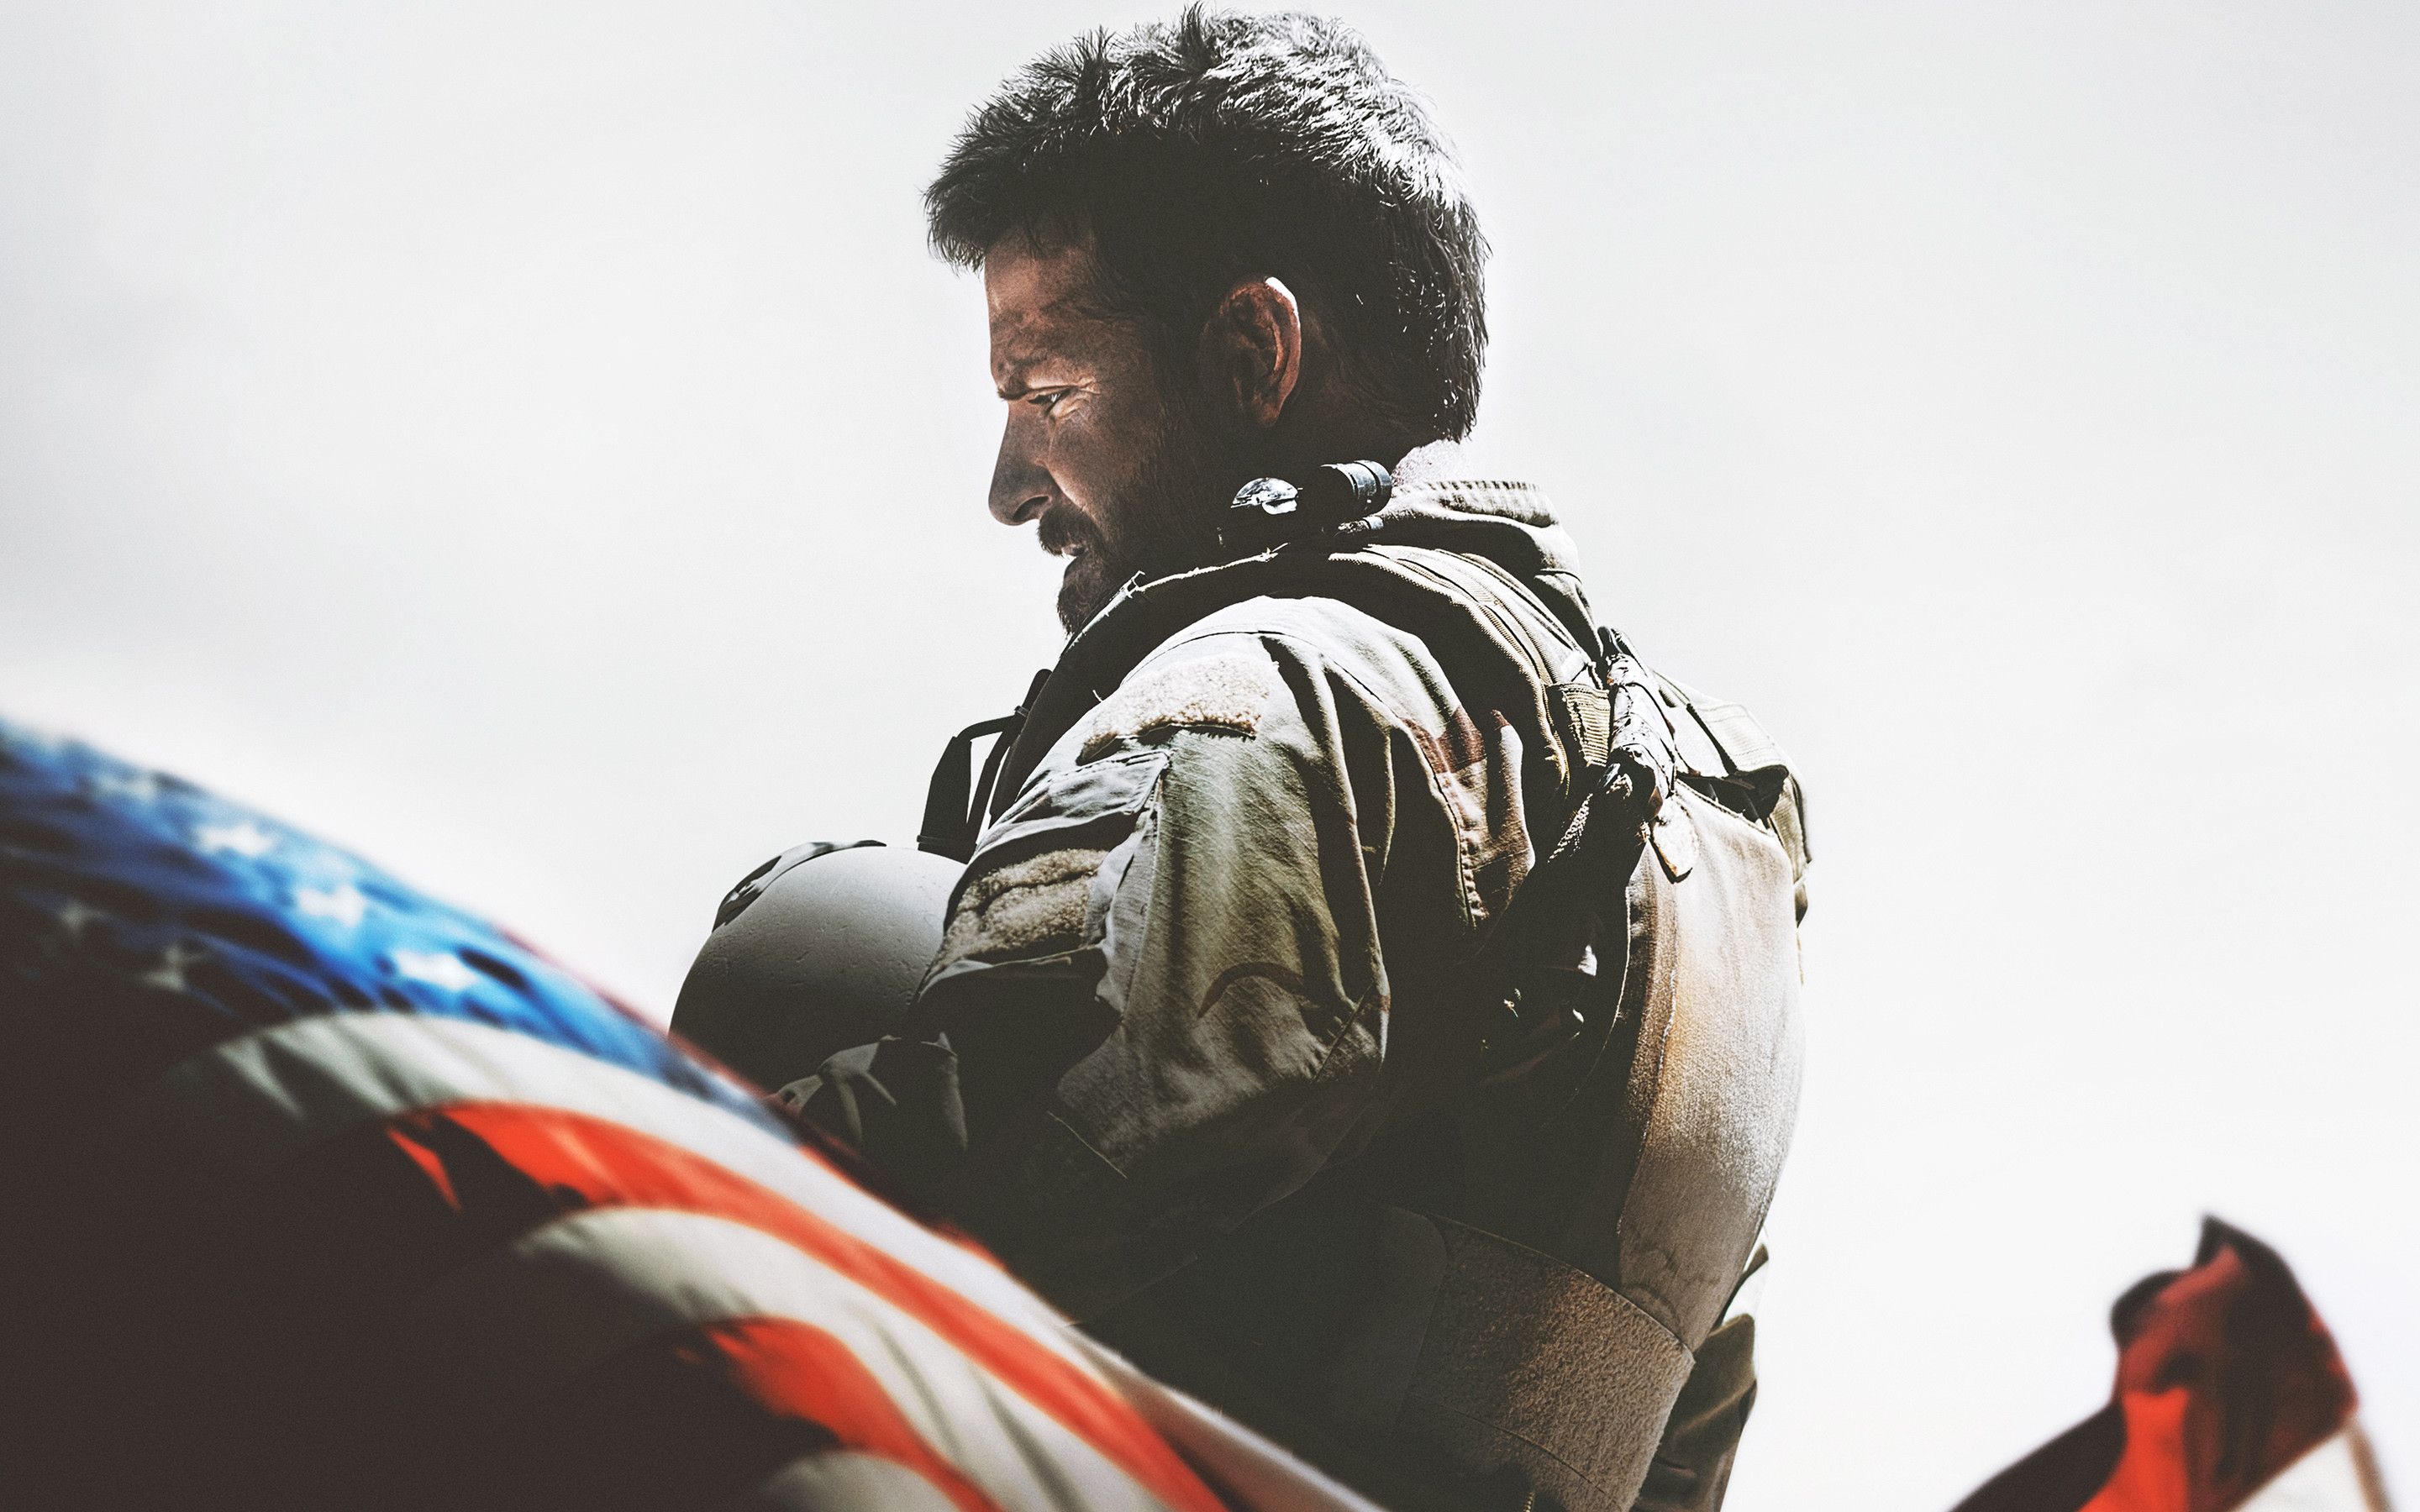 American Sniper Wallpaper background picture